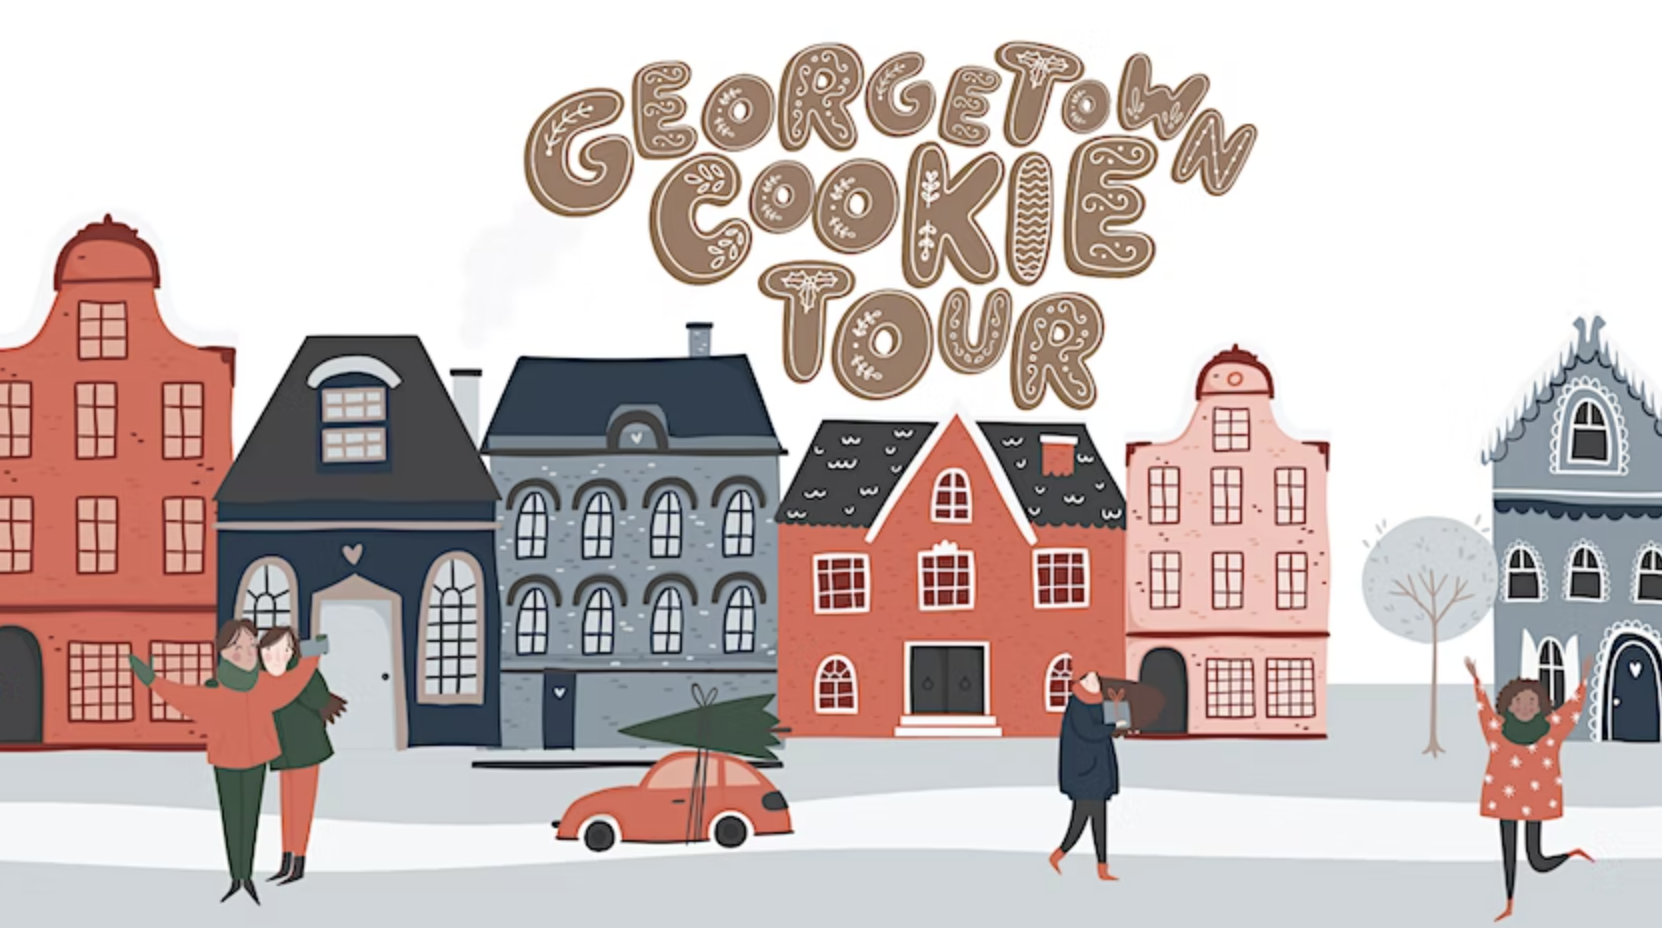 Georgetown Cookie Tour